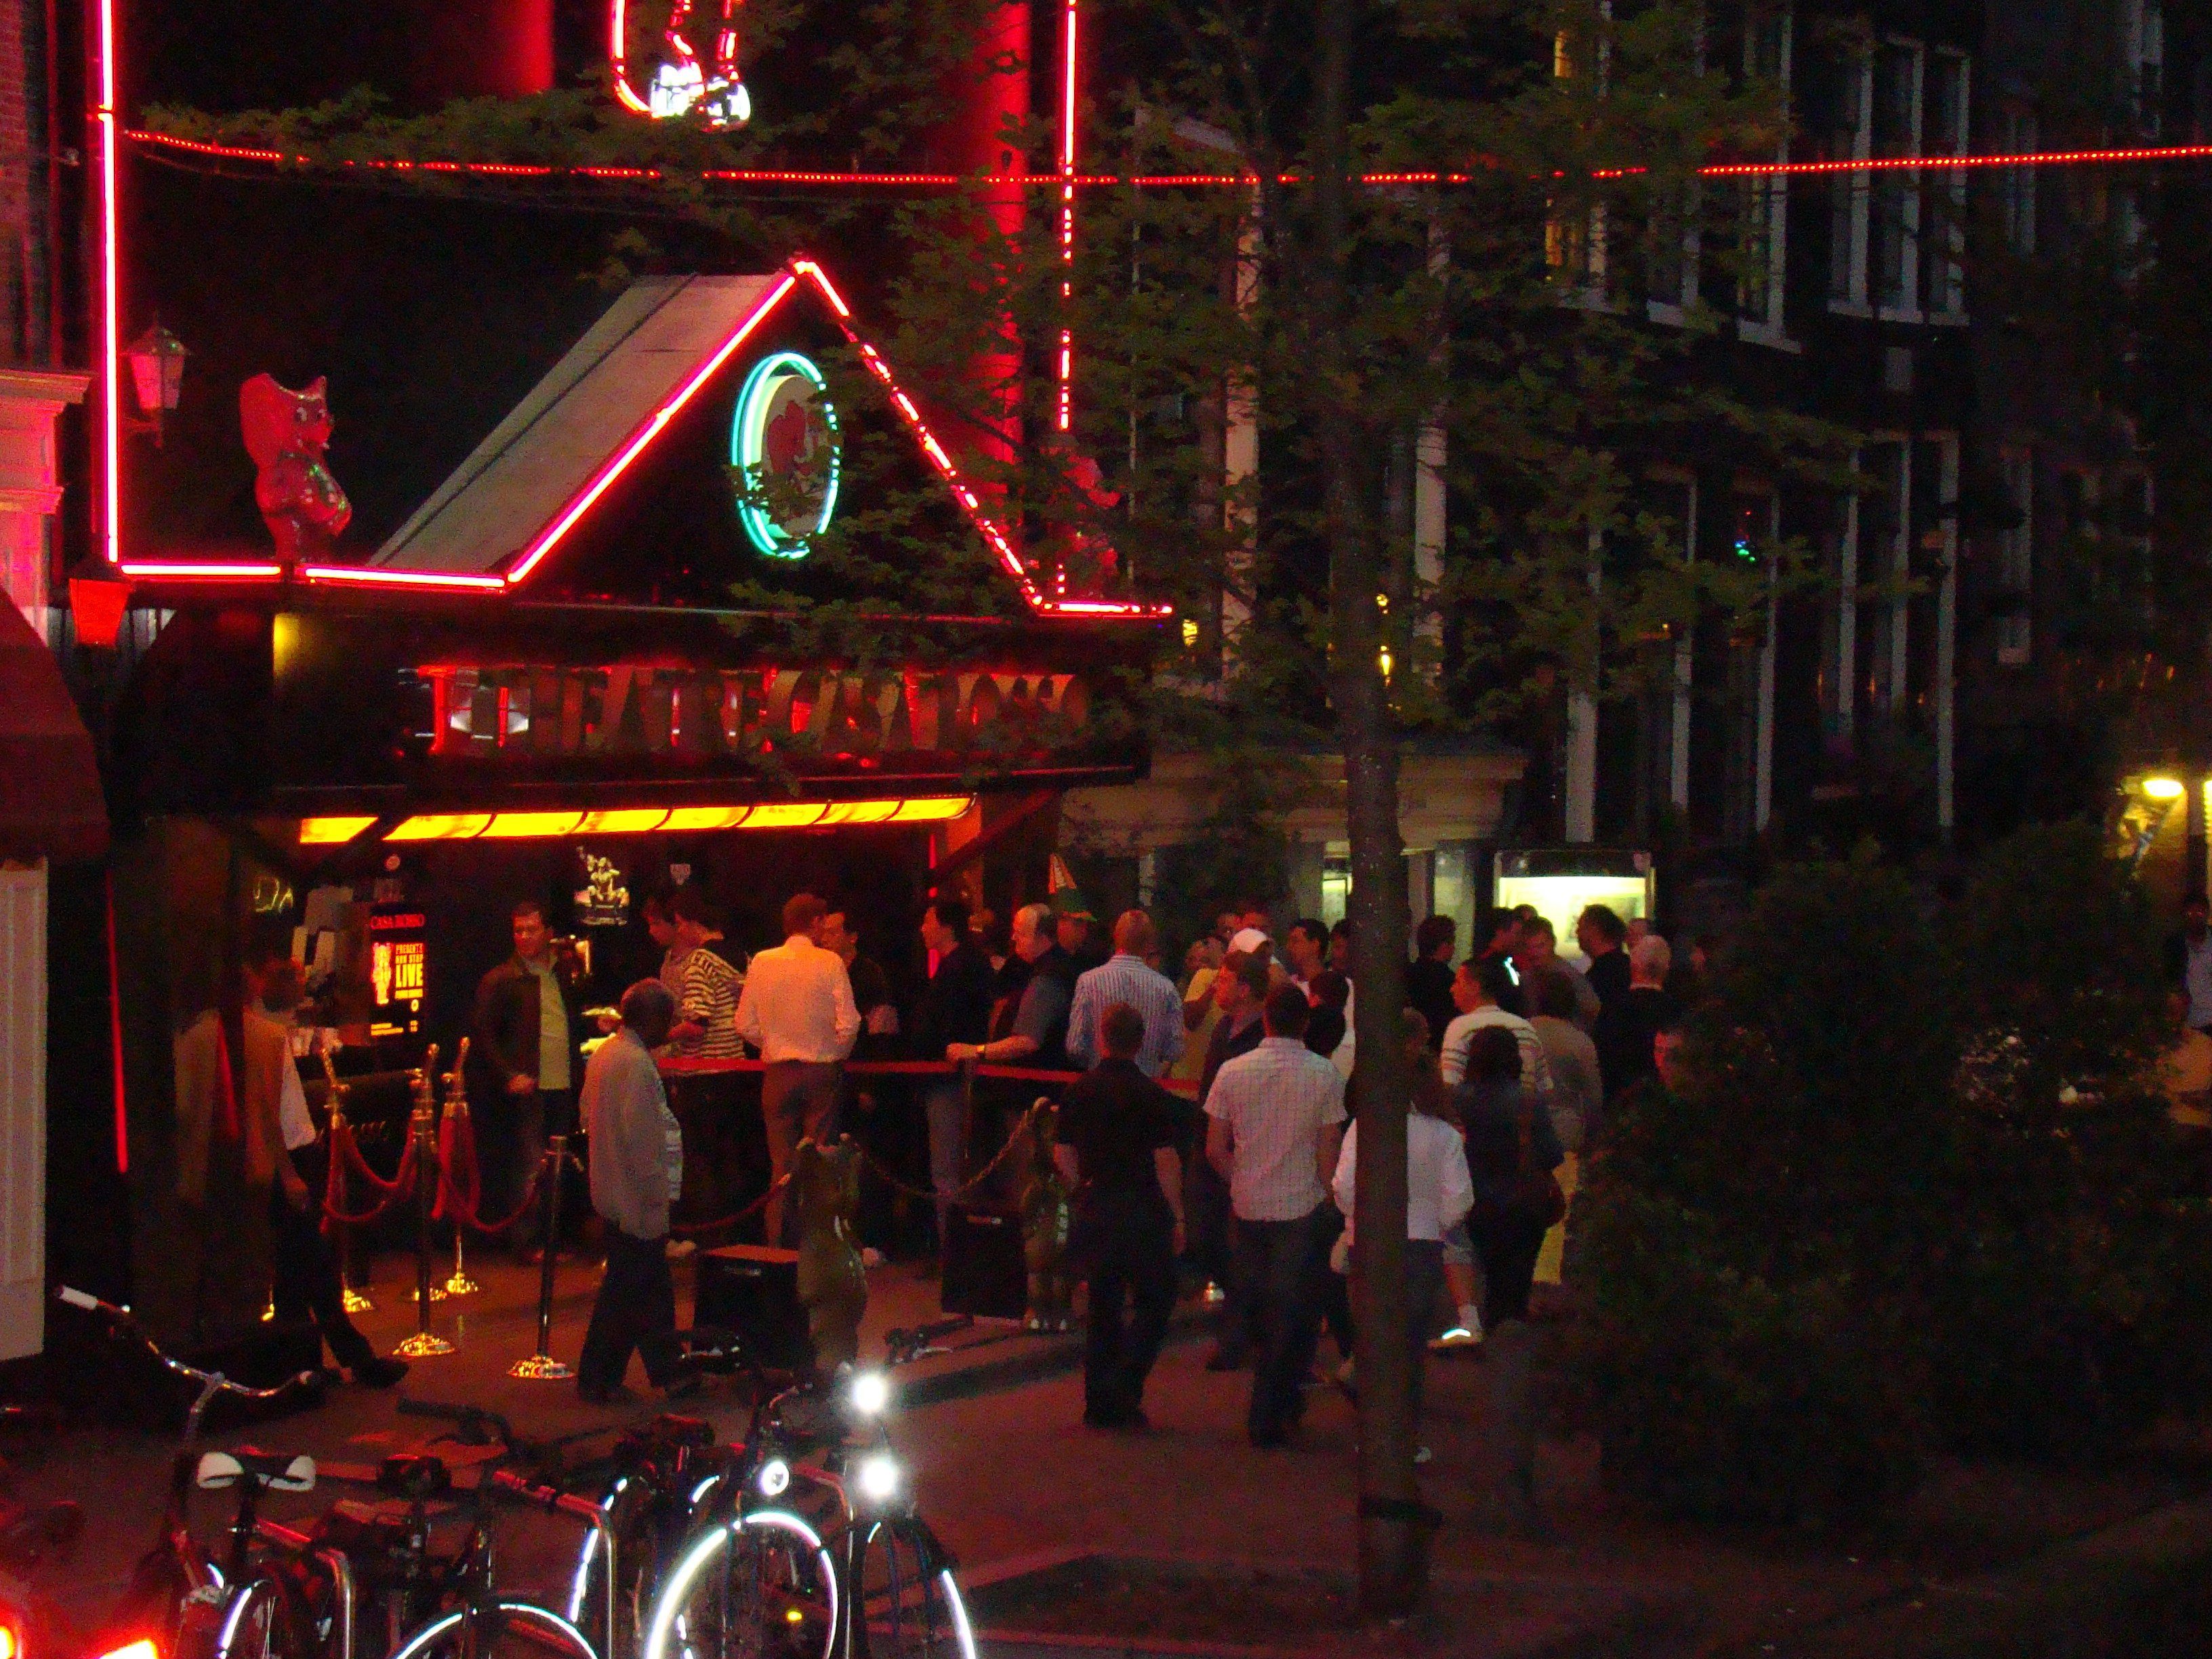 amsterdam club in swinger